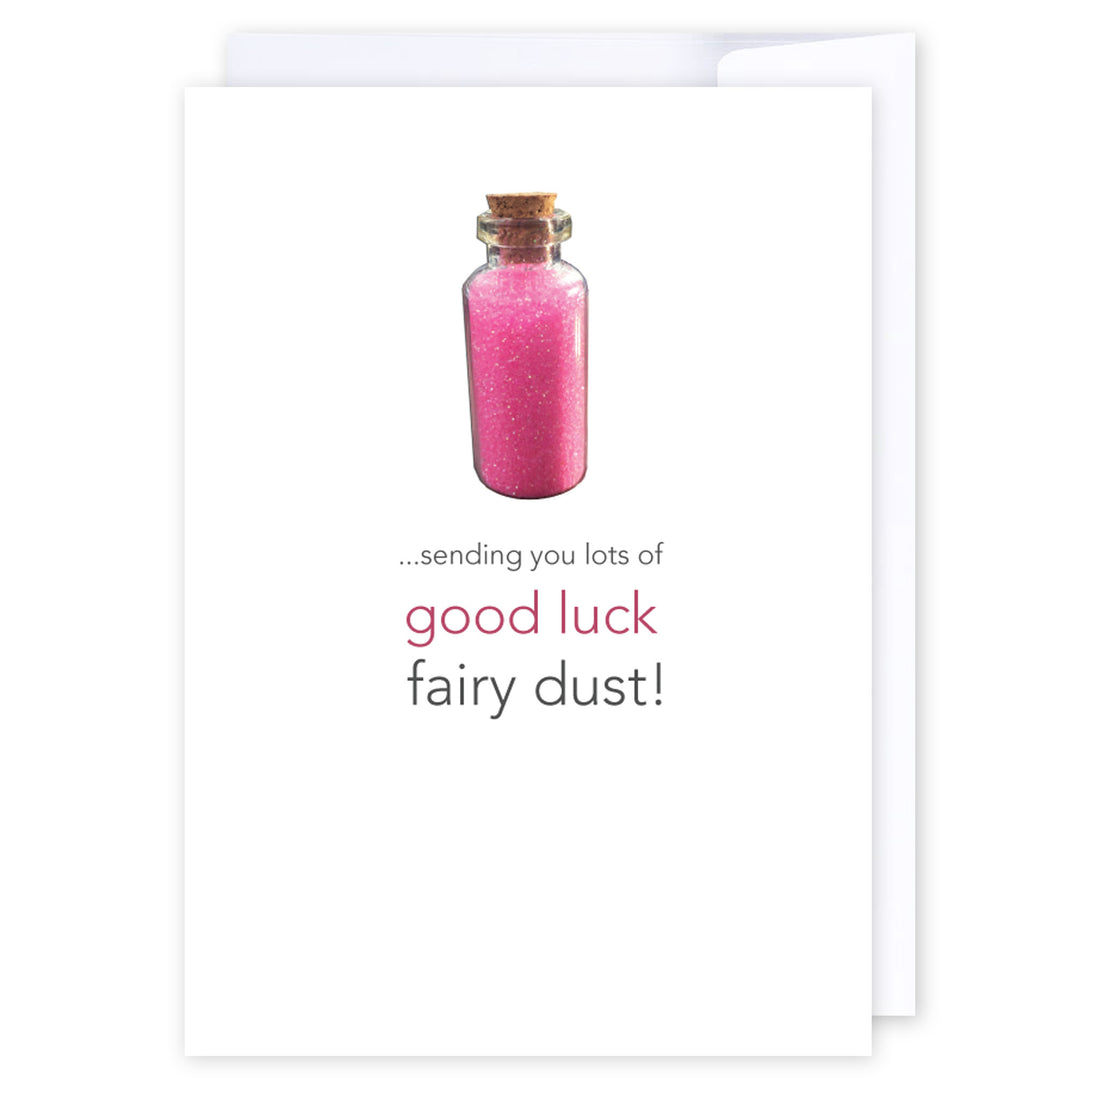 Fairy dust